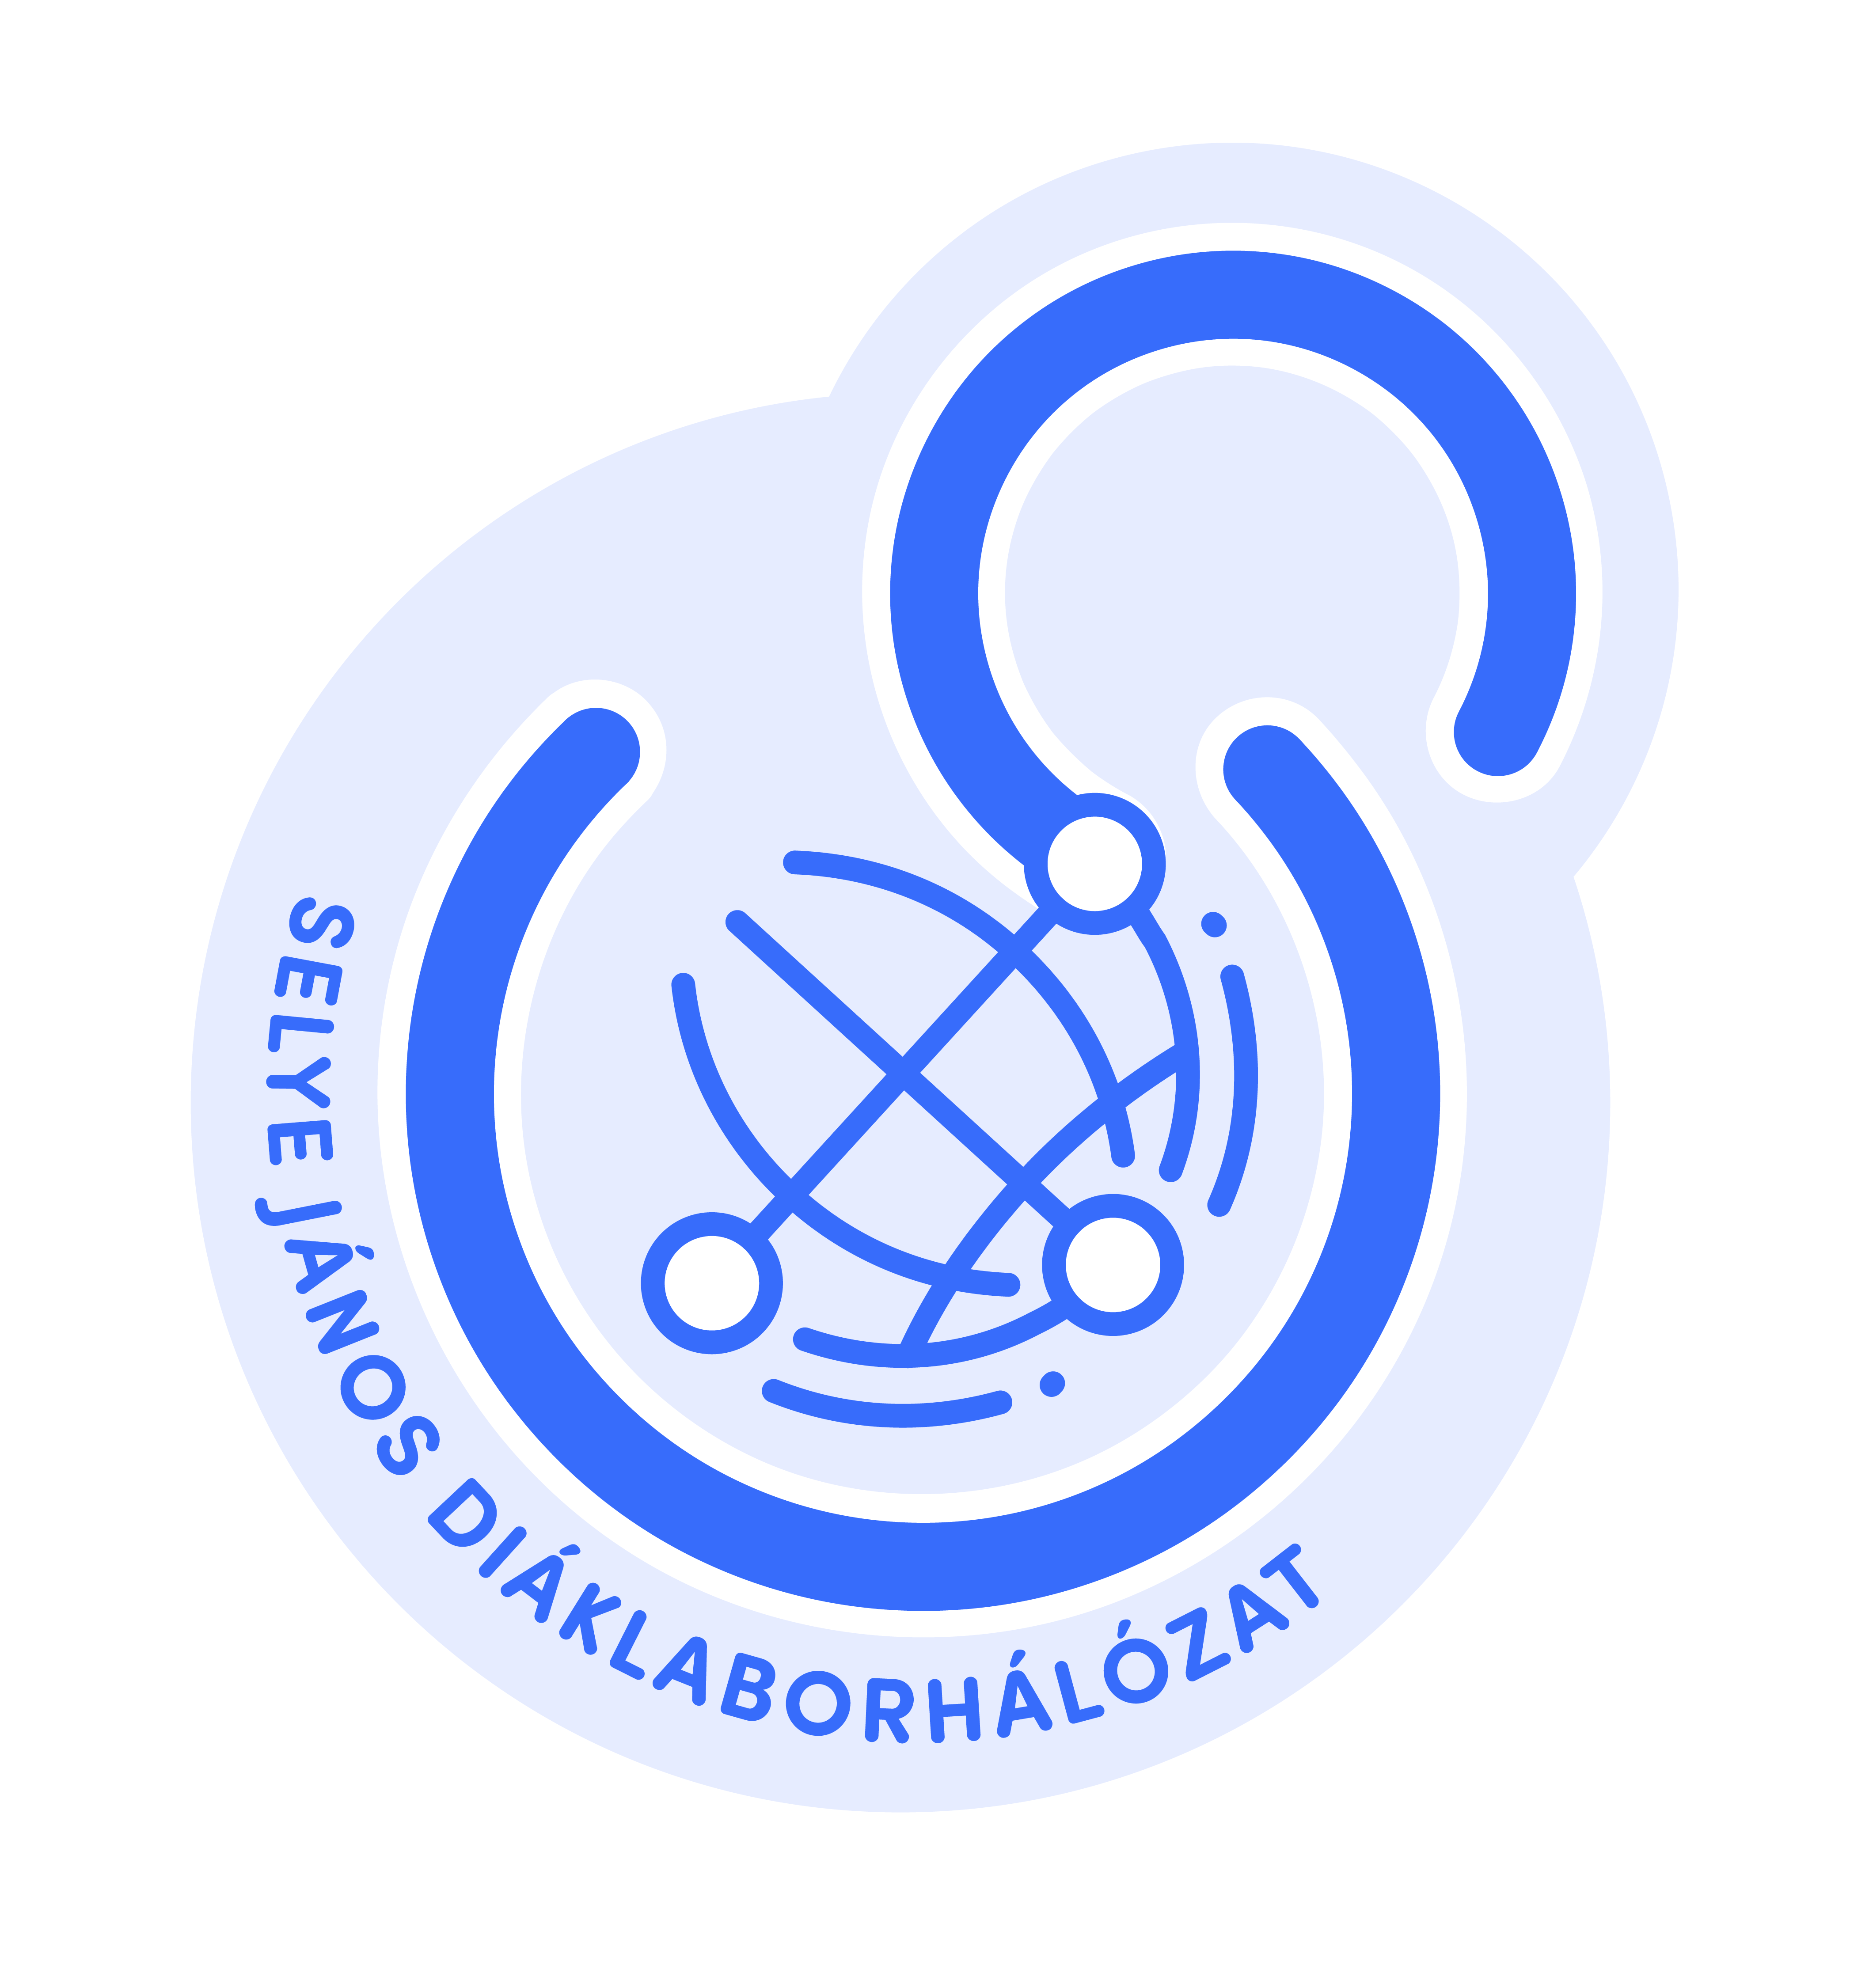 Selye Janos diaklaborhalozat logo 1